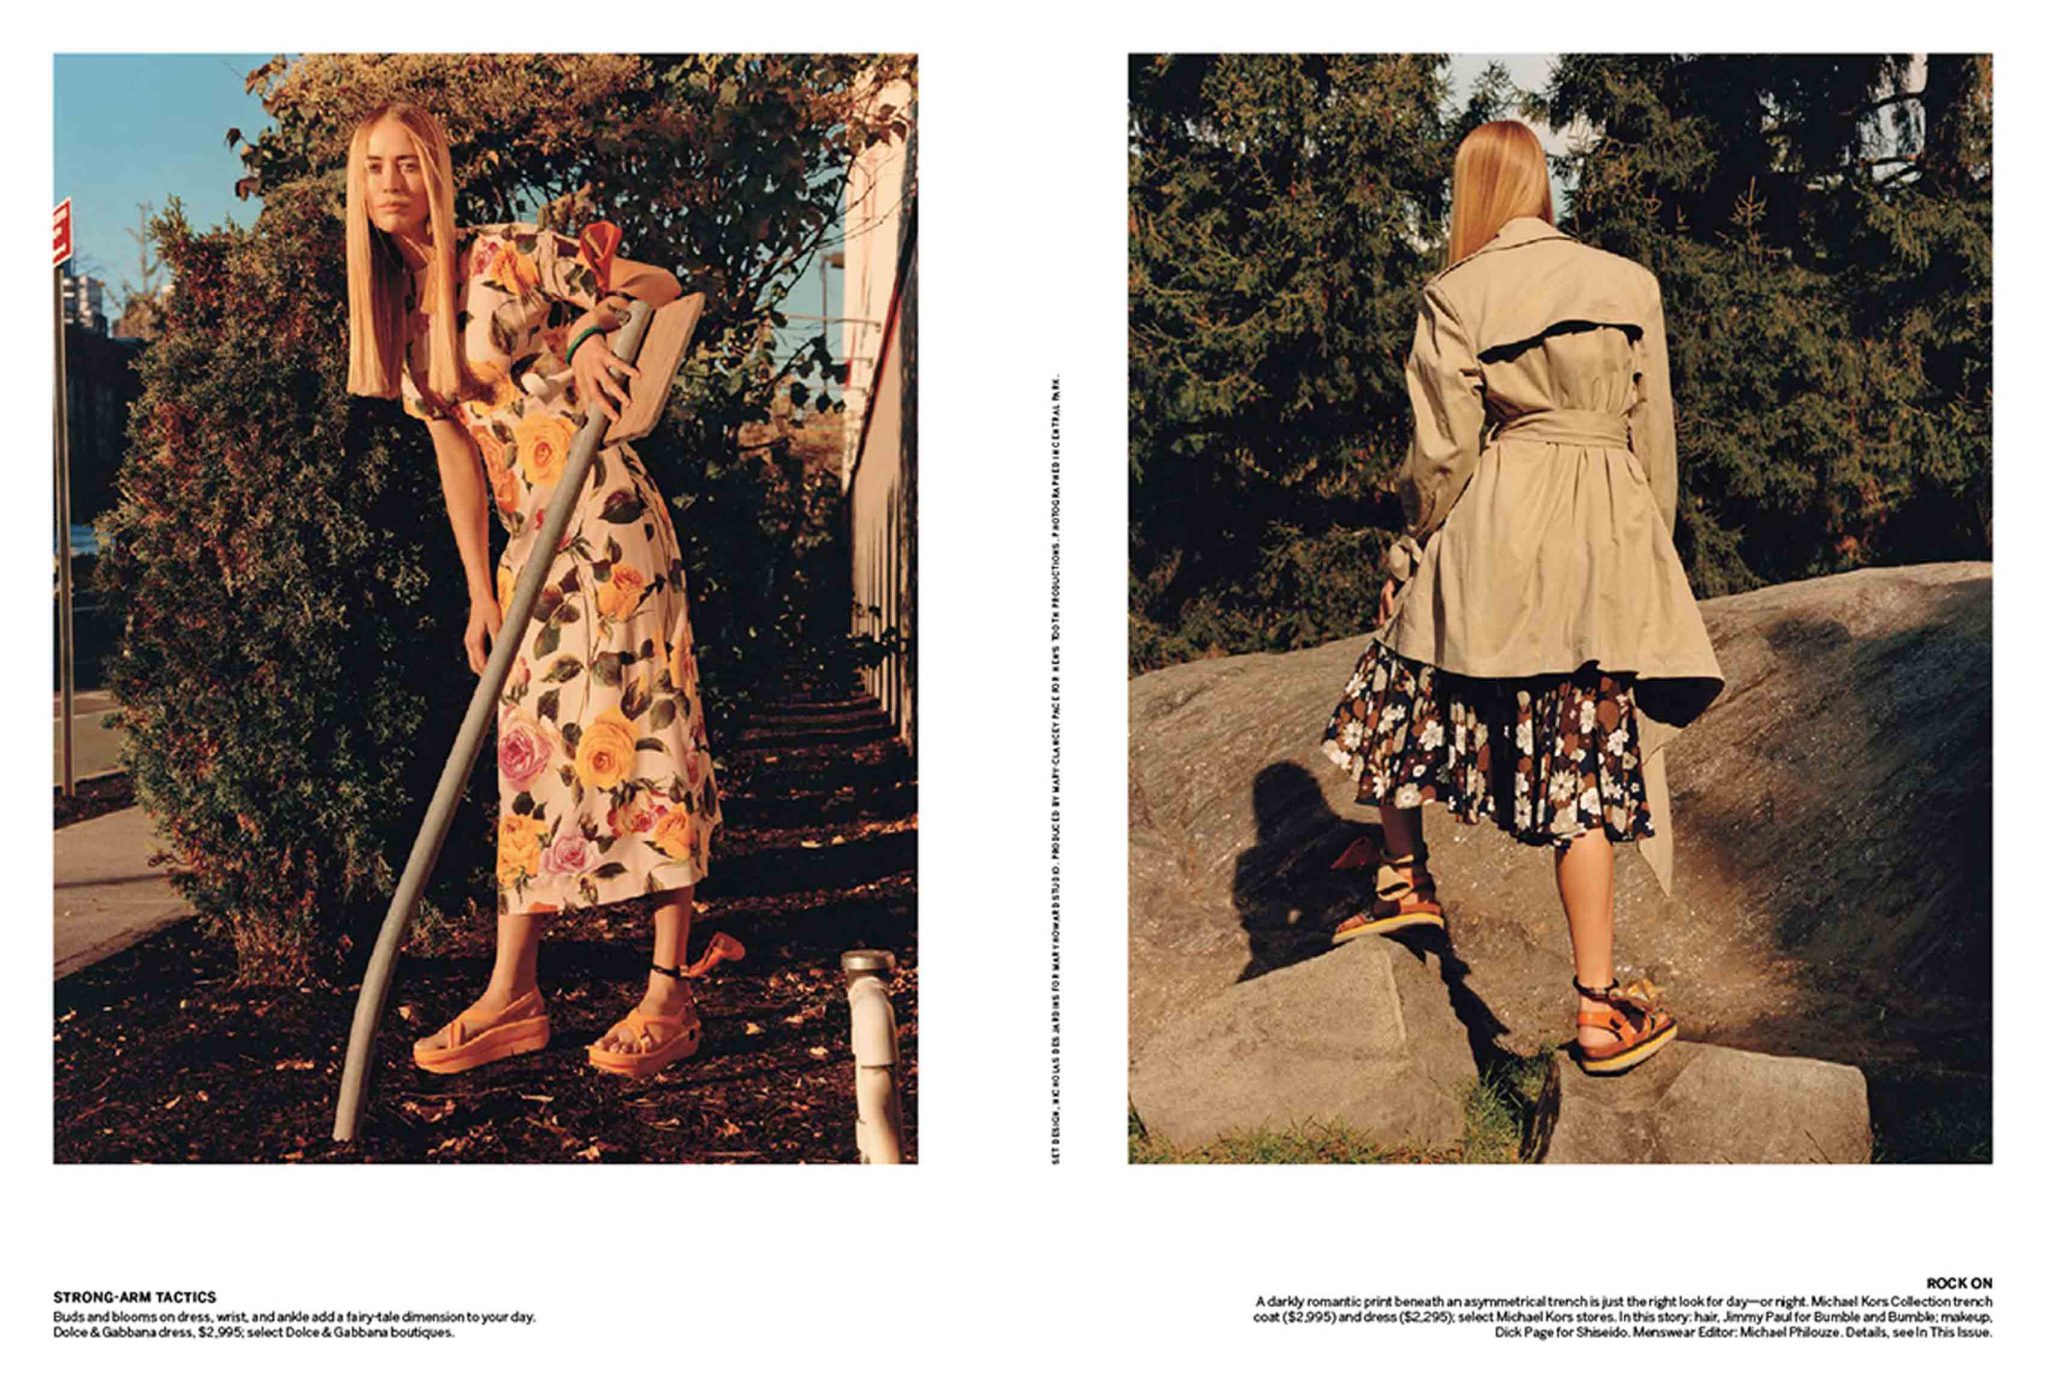 Michael Philouze | Vogue US: Good Natured | 4